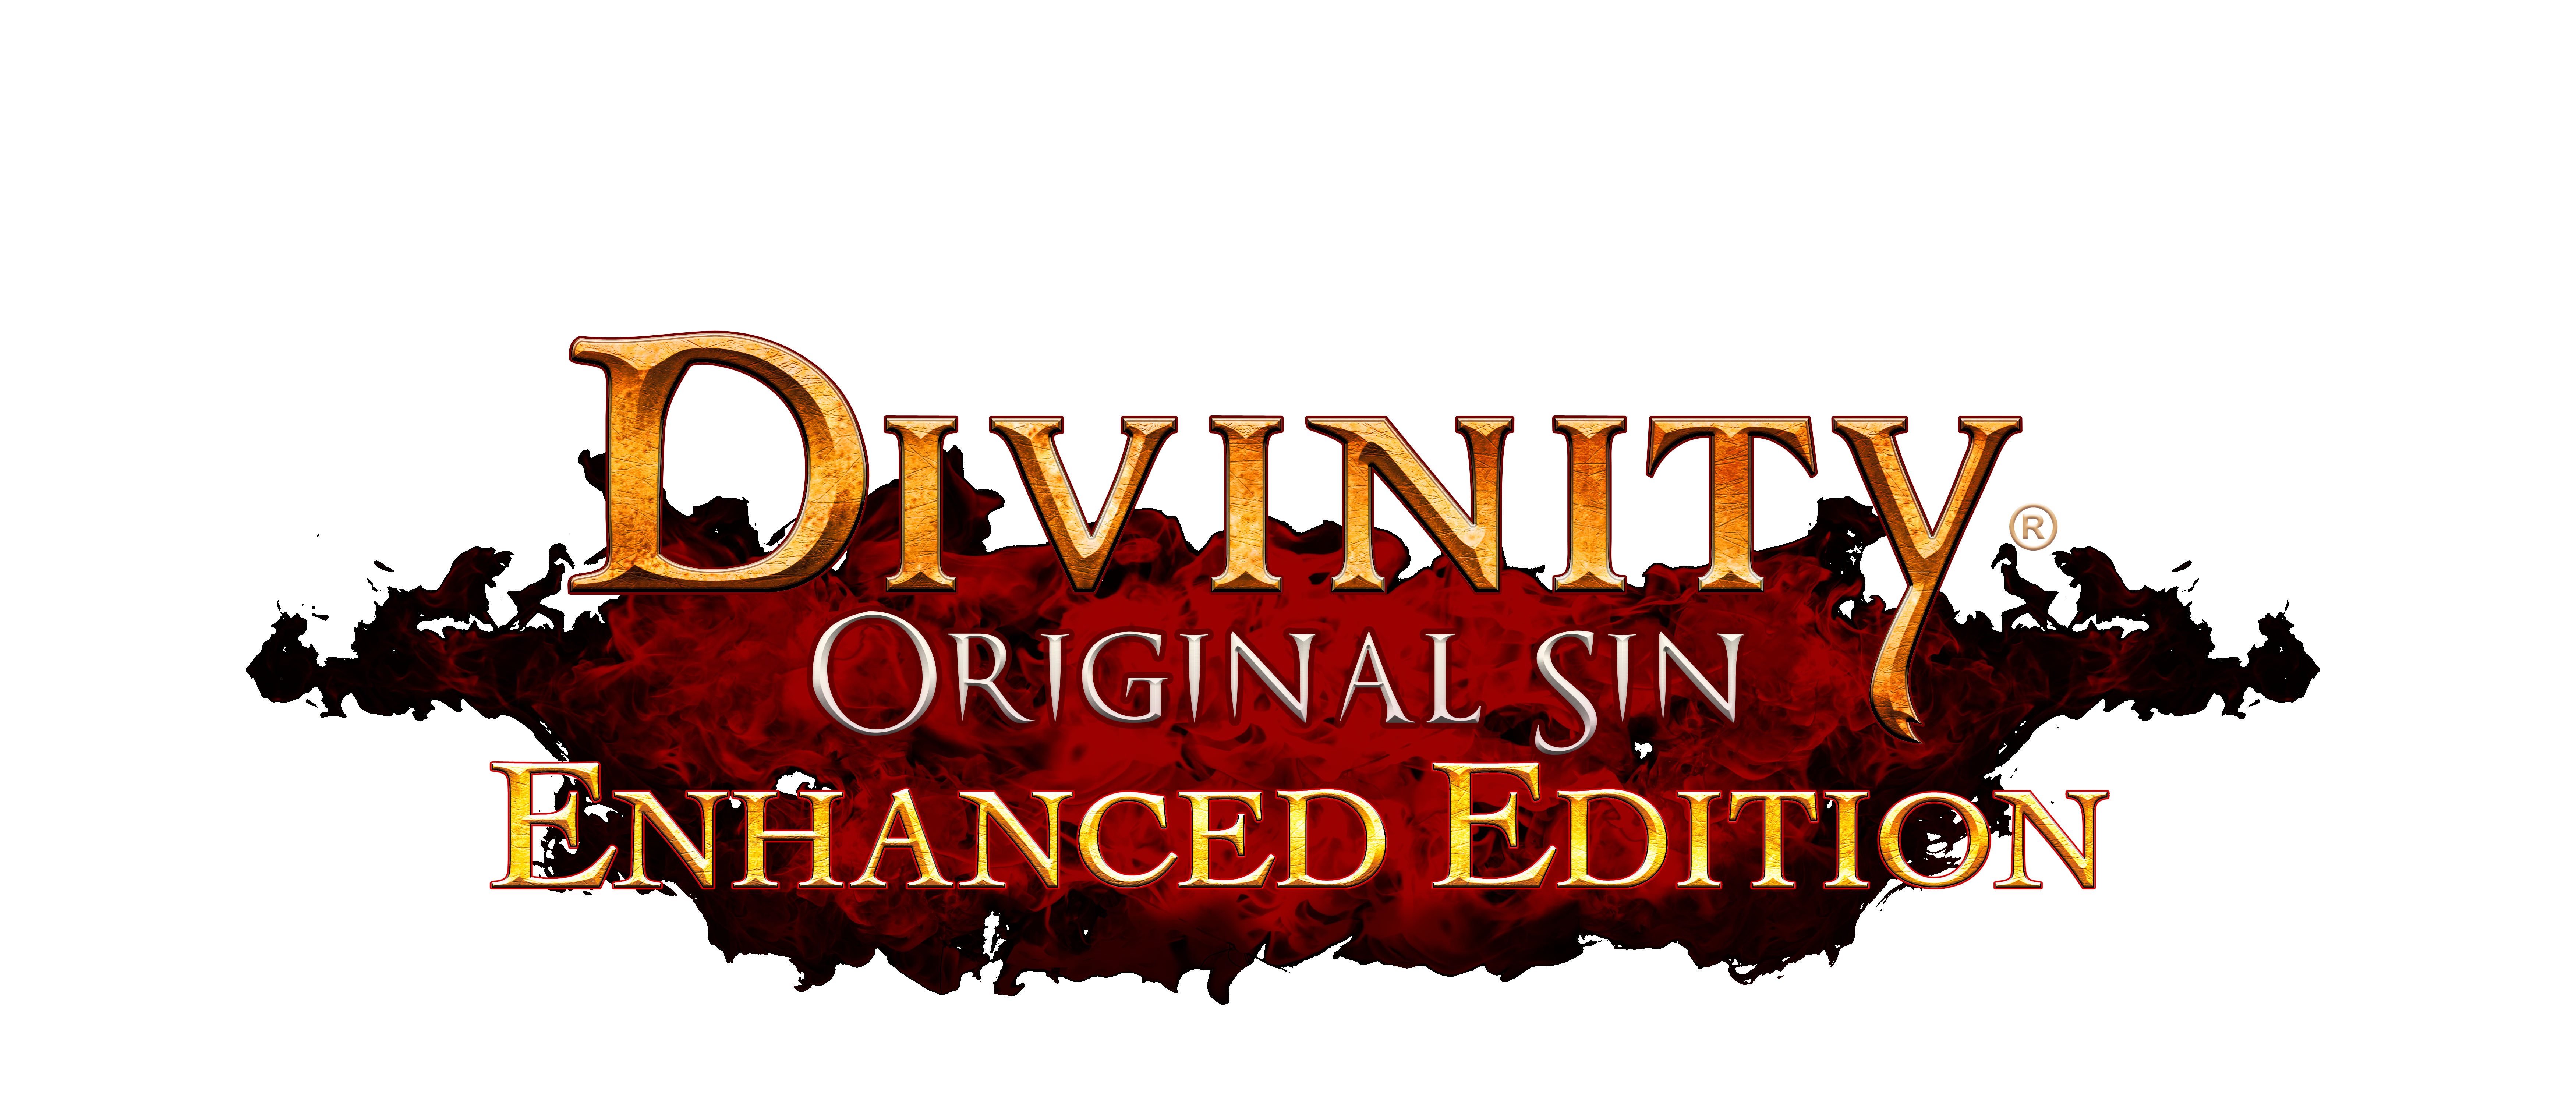 Divinity Original Sin Logo Po